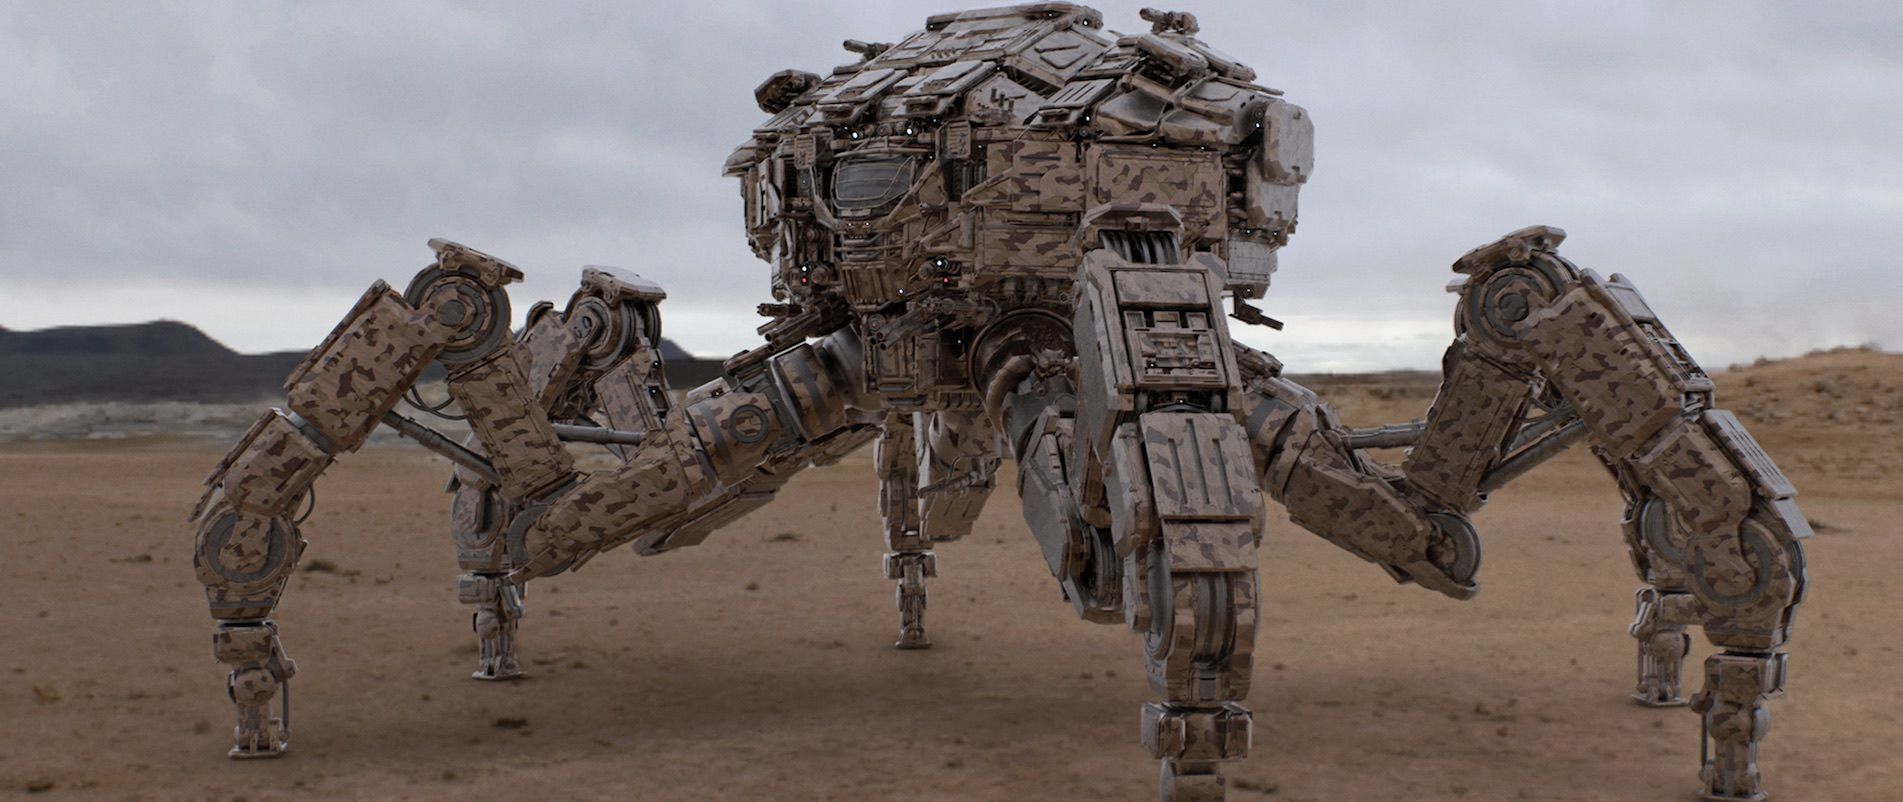 Robots and the Future of Warfare